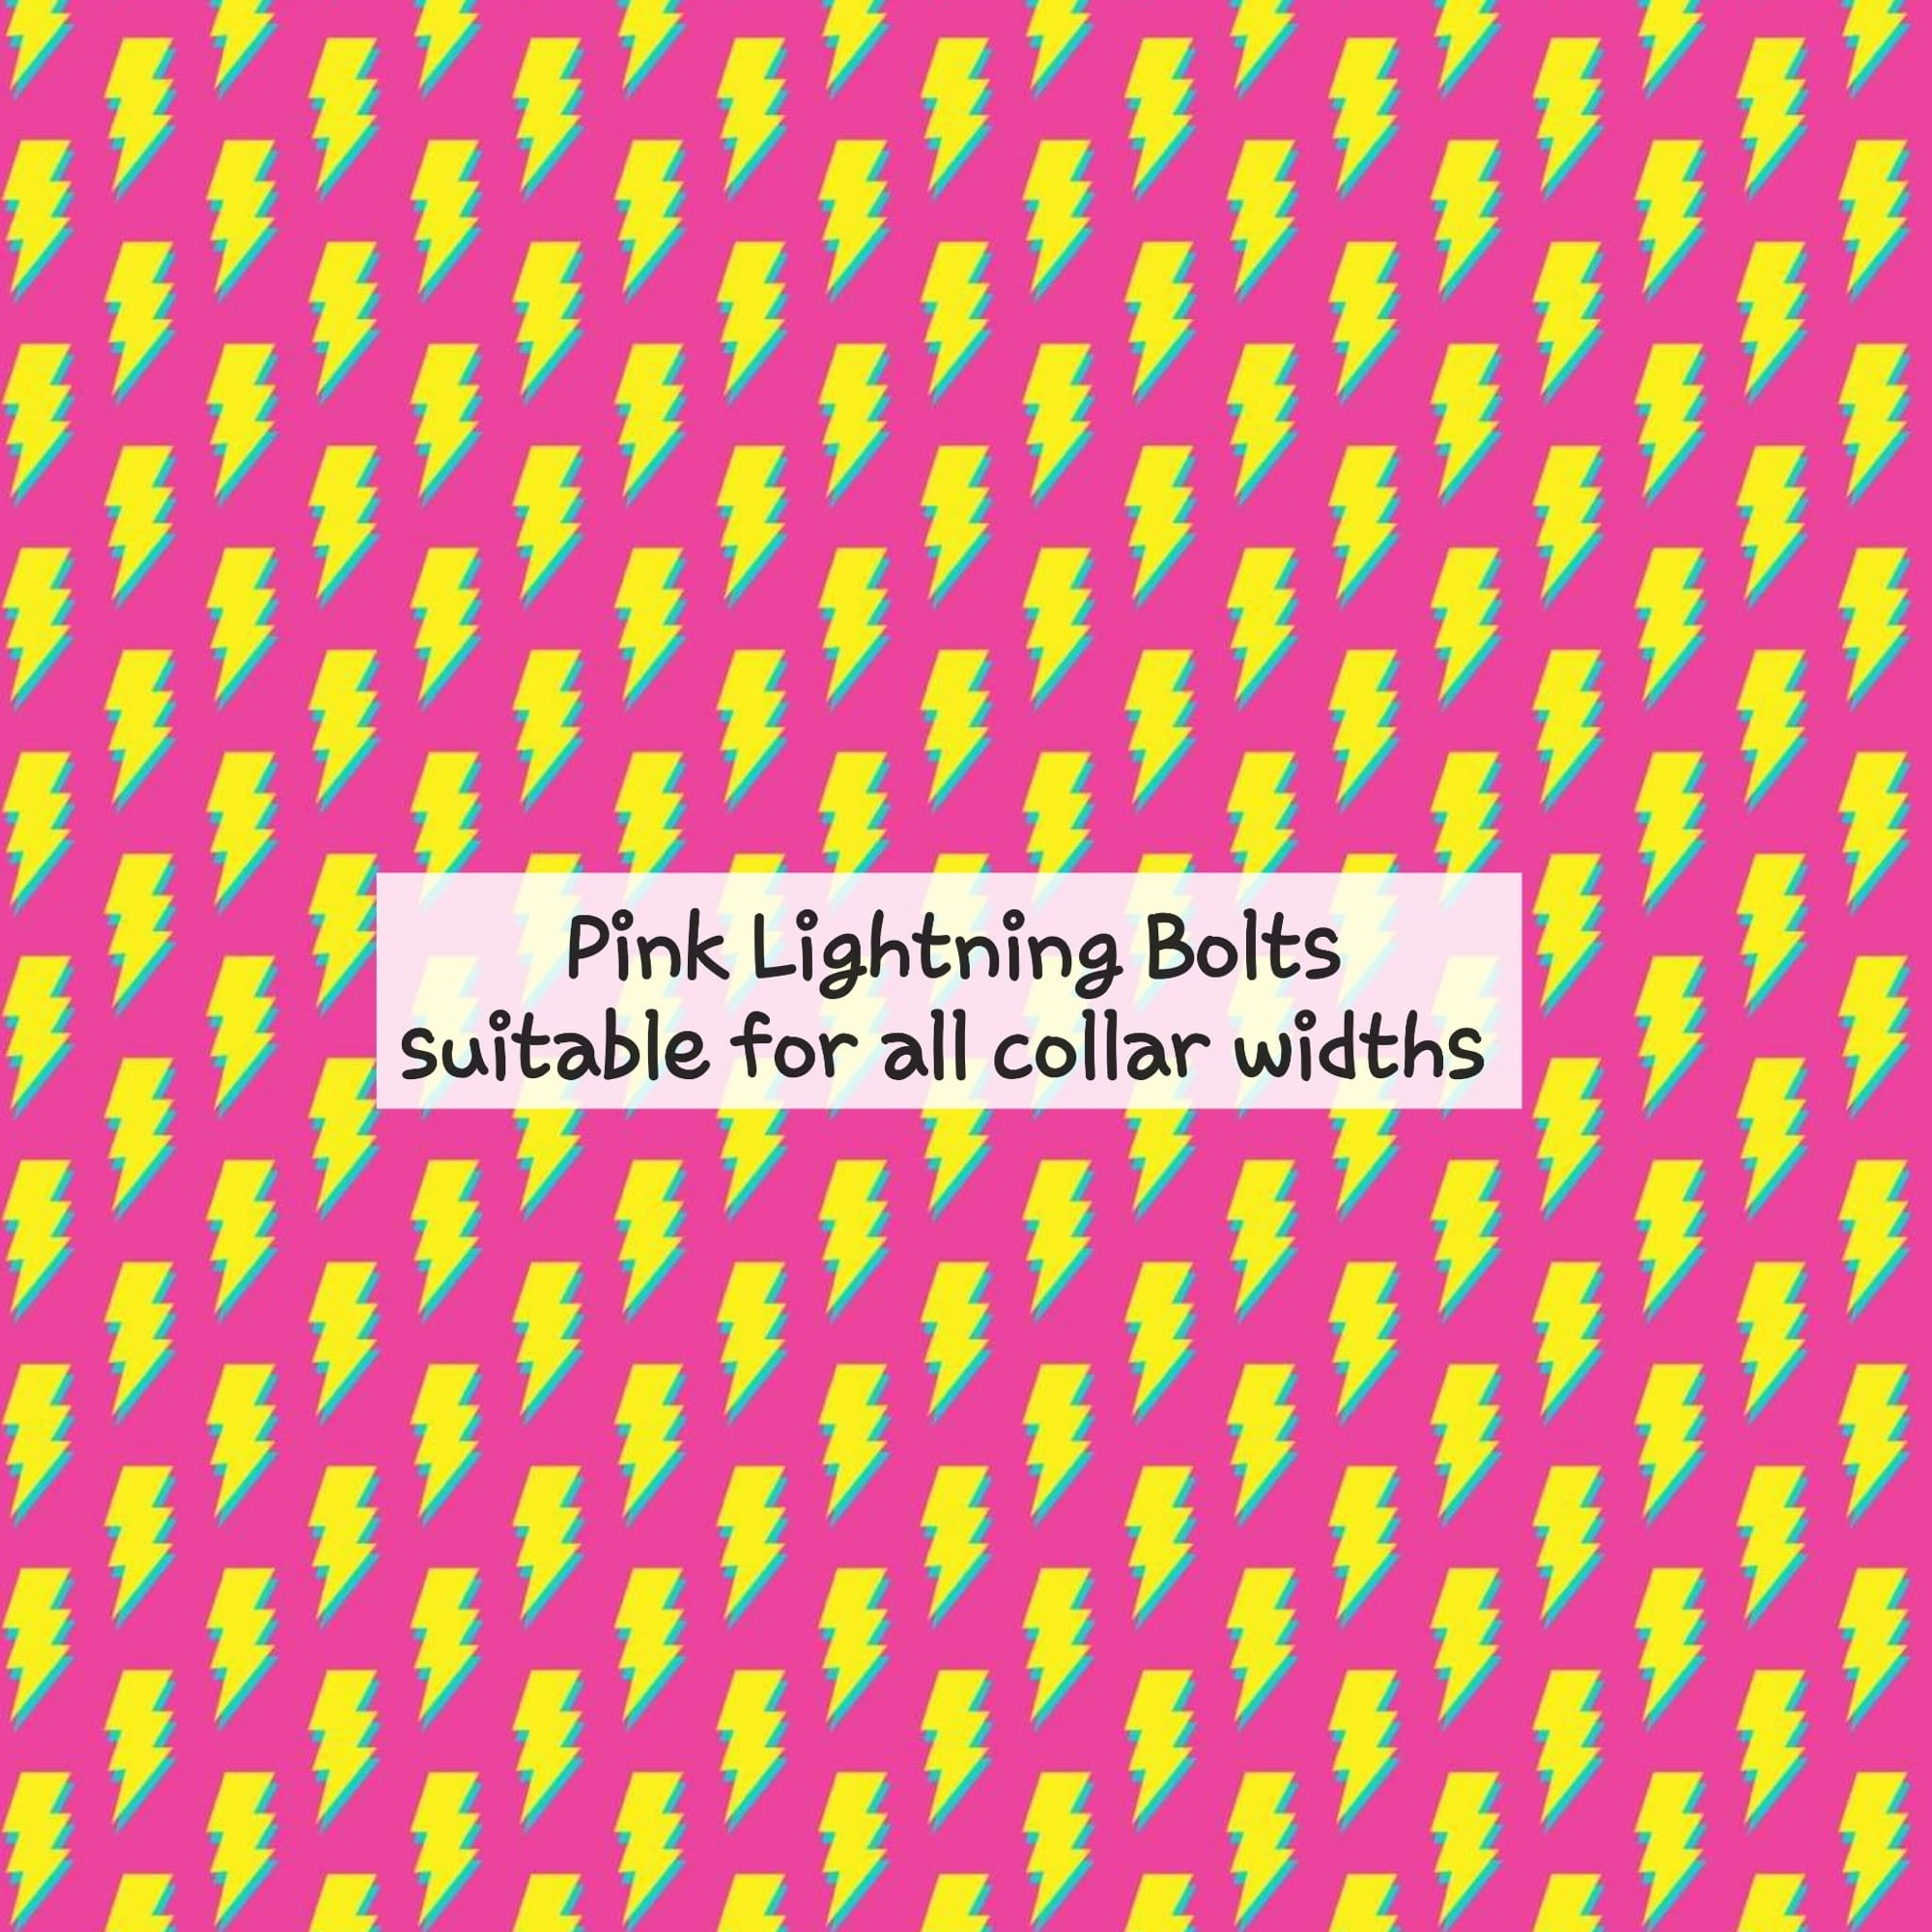 Pink Lightning Bolts